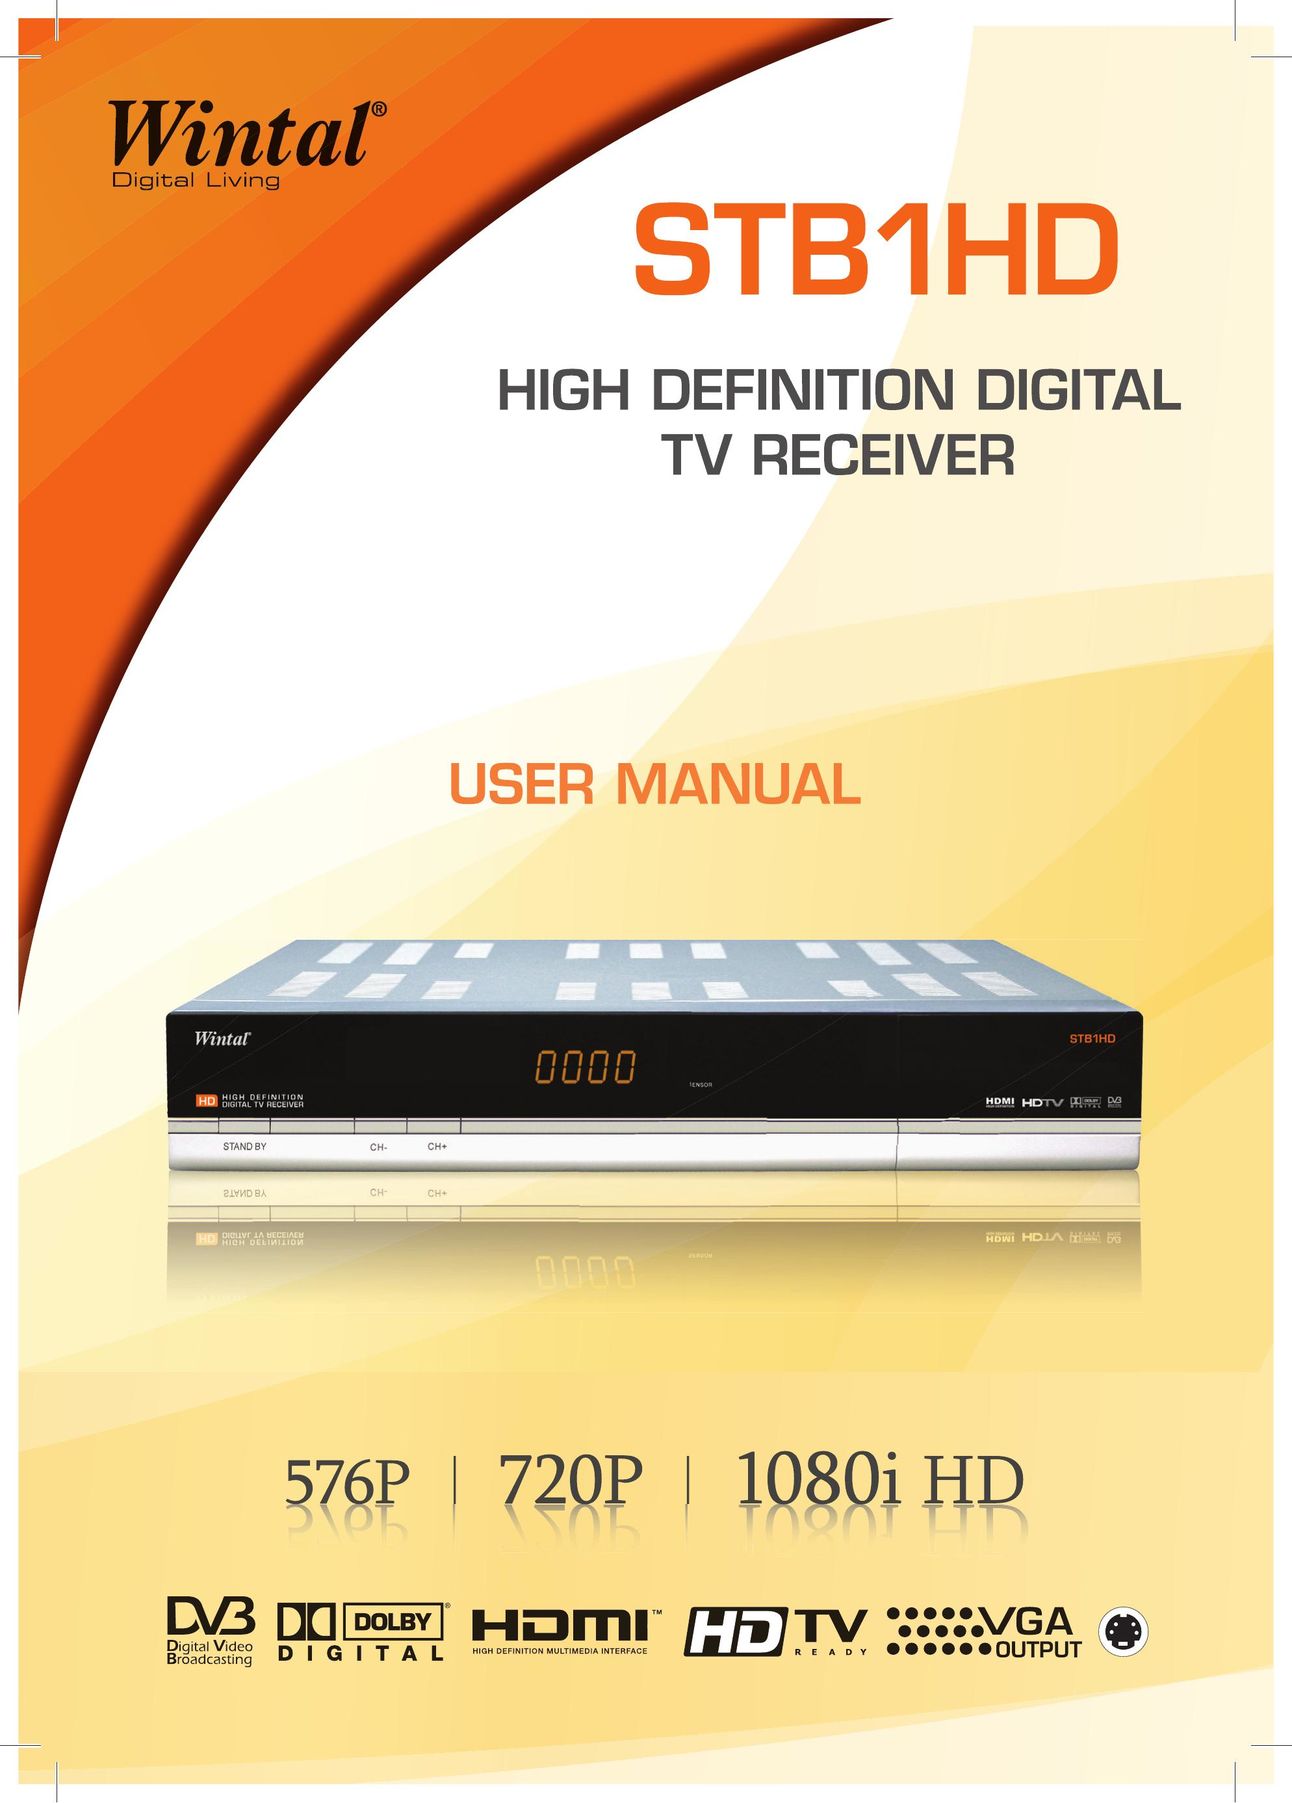 Wintal STB1HD TV Receiver User Manual